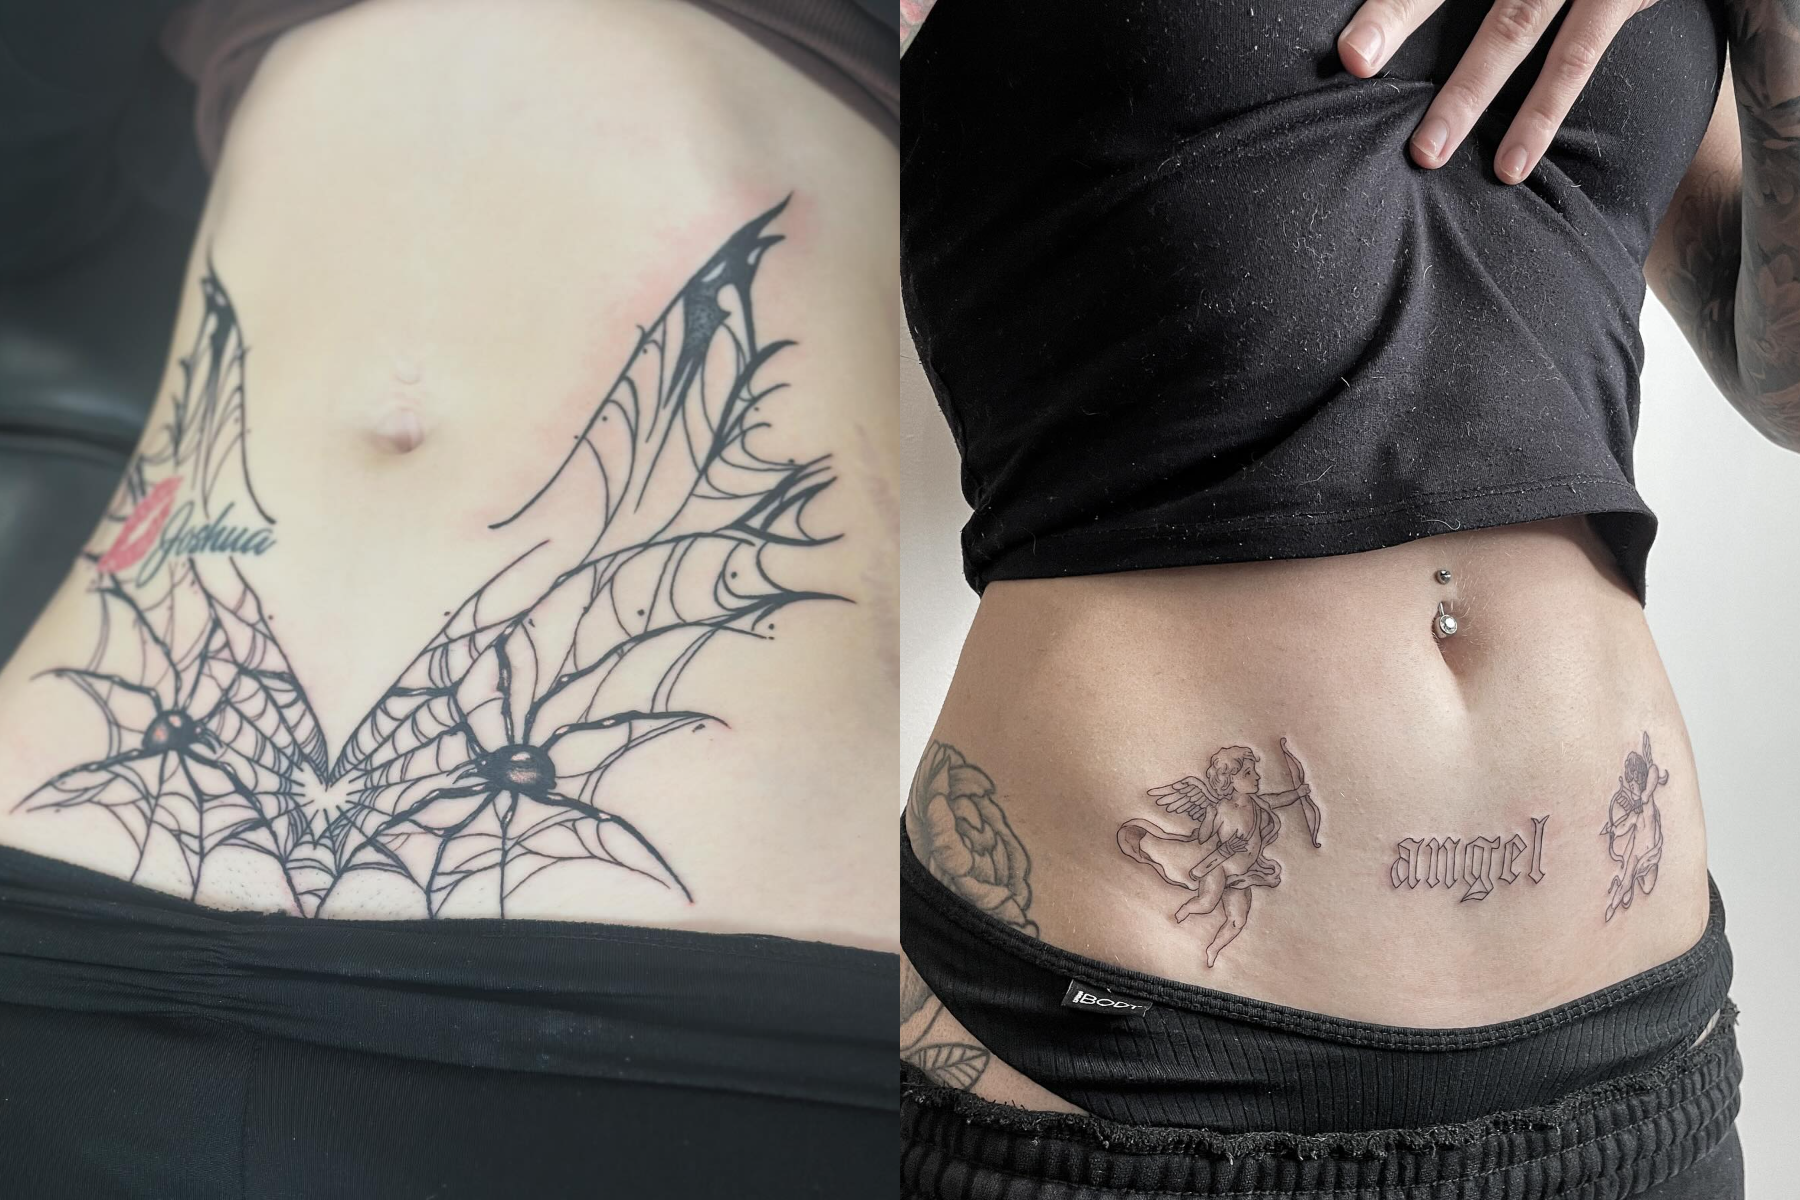 stomach tattoo | Stomach tattoos women, Tattoos, Side stomach tattoos